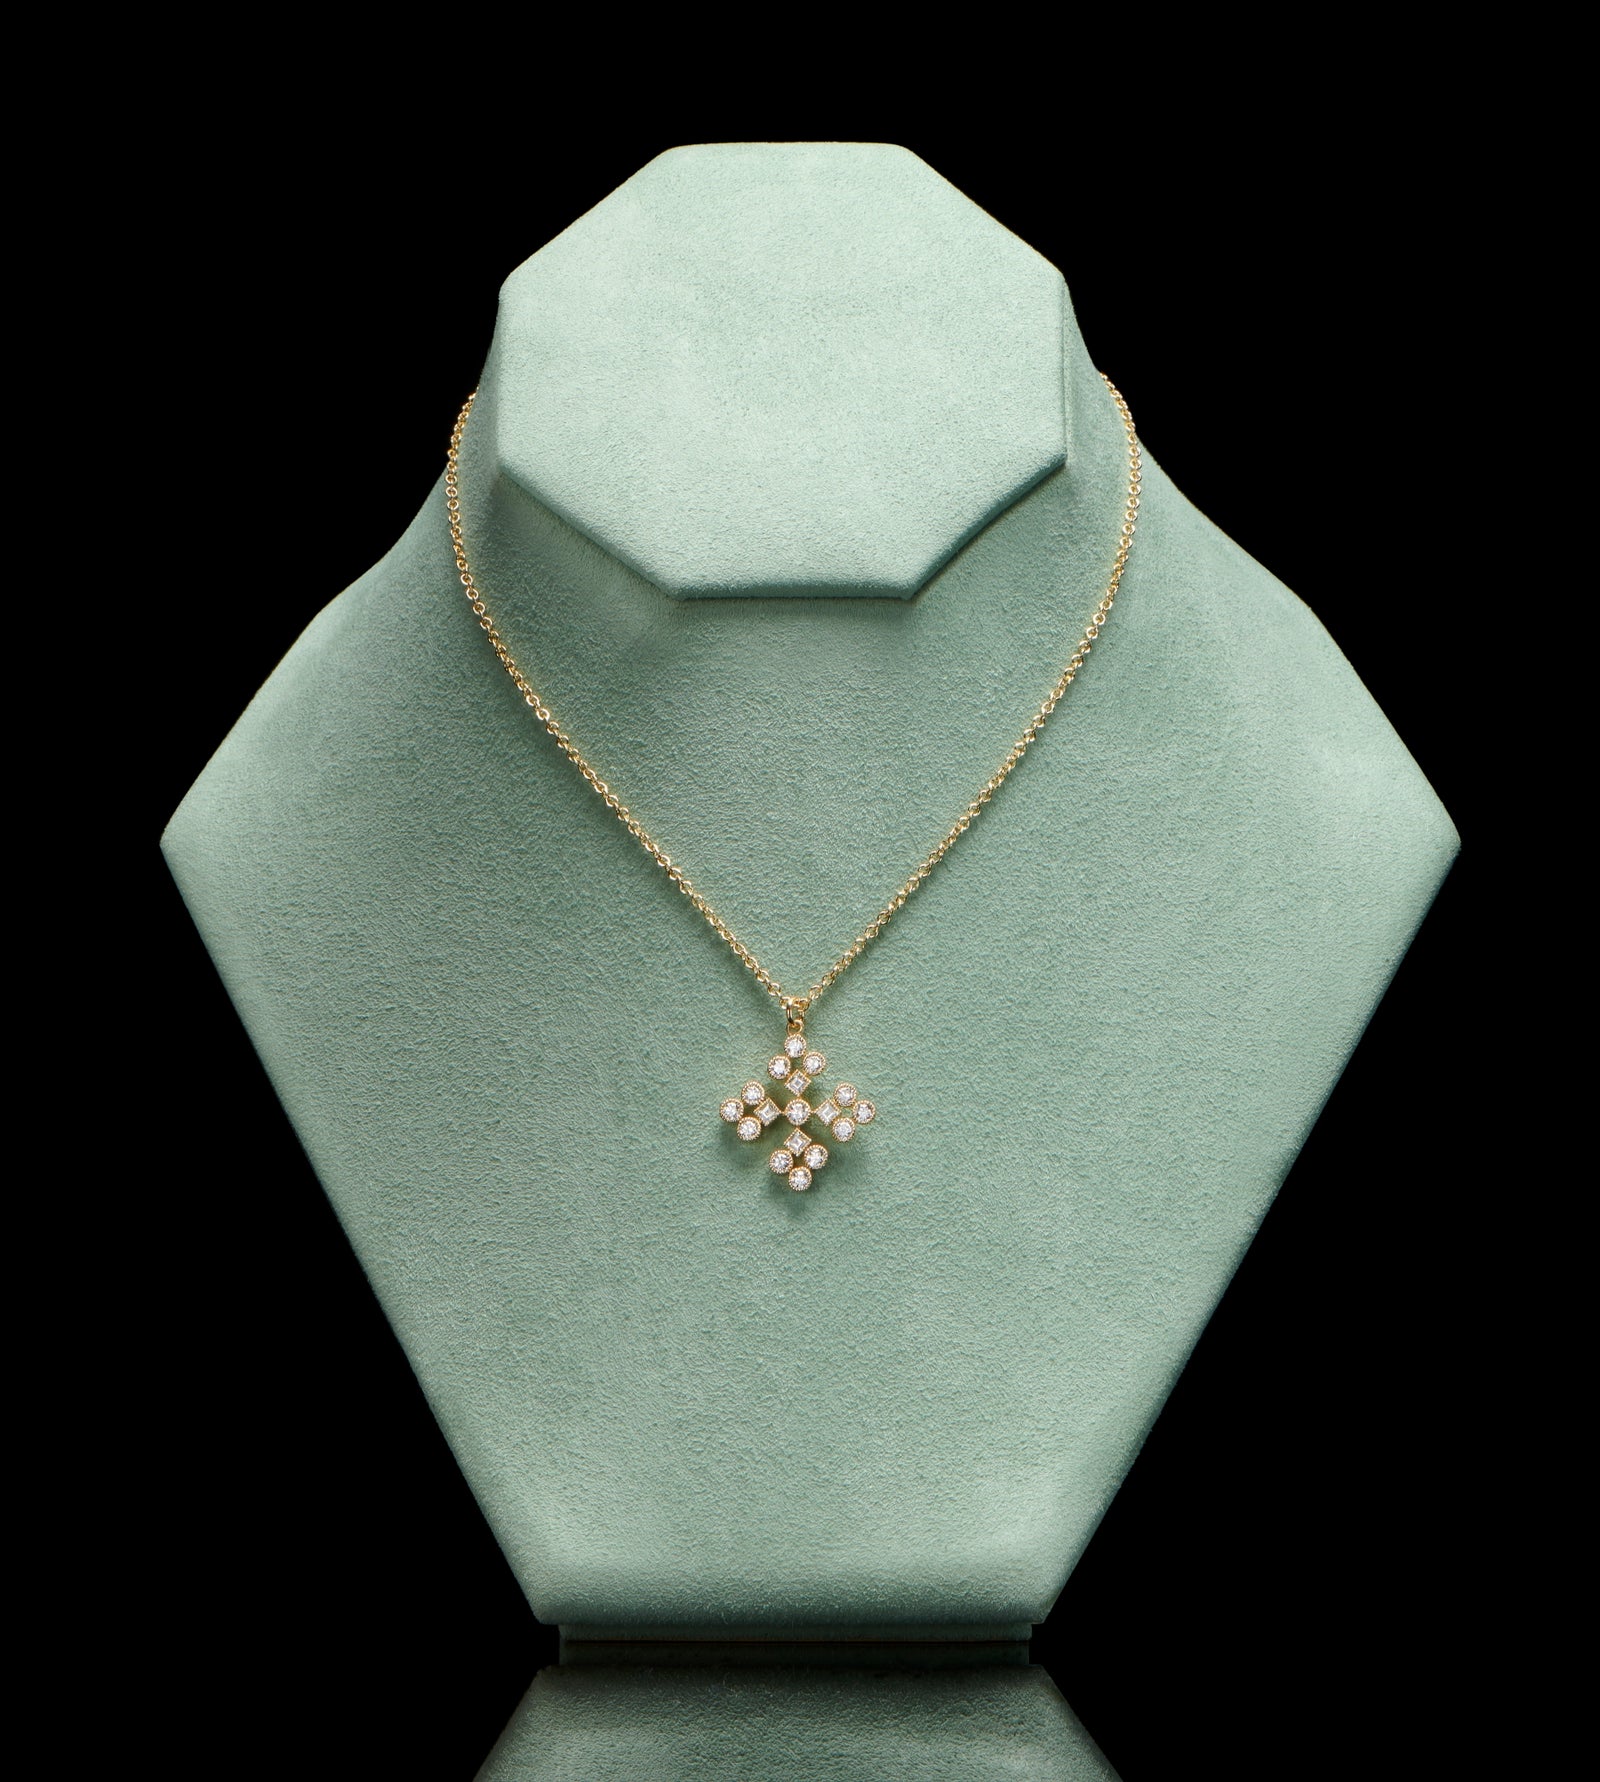 The impossible snowflake. A diamond pendant